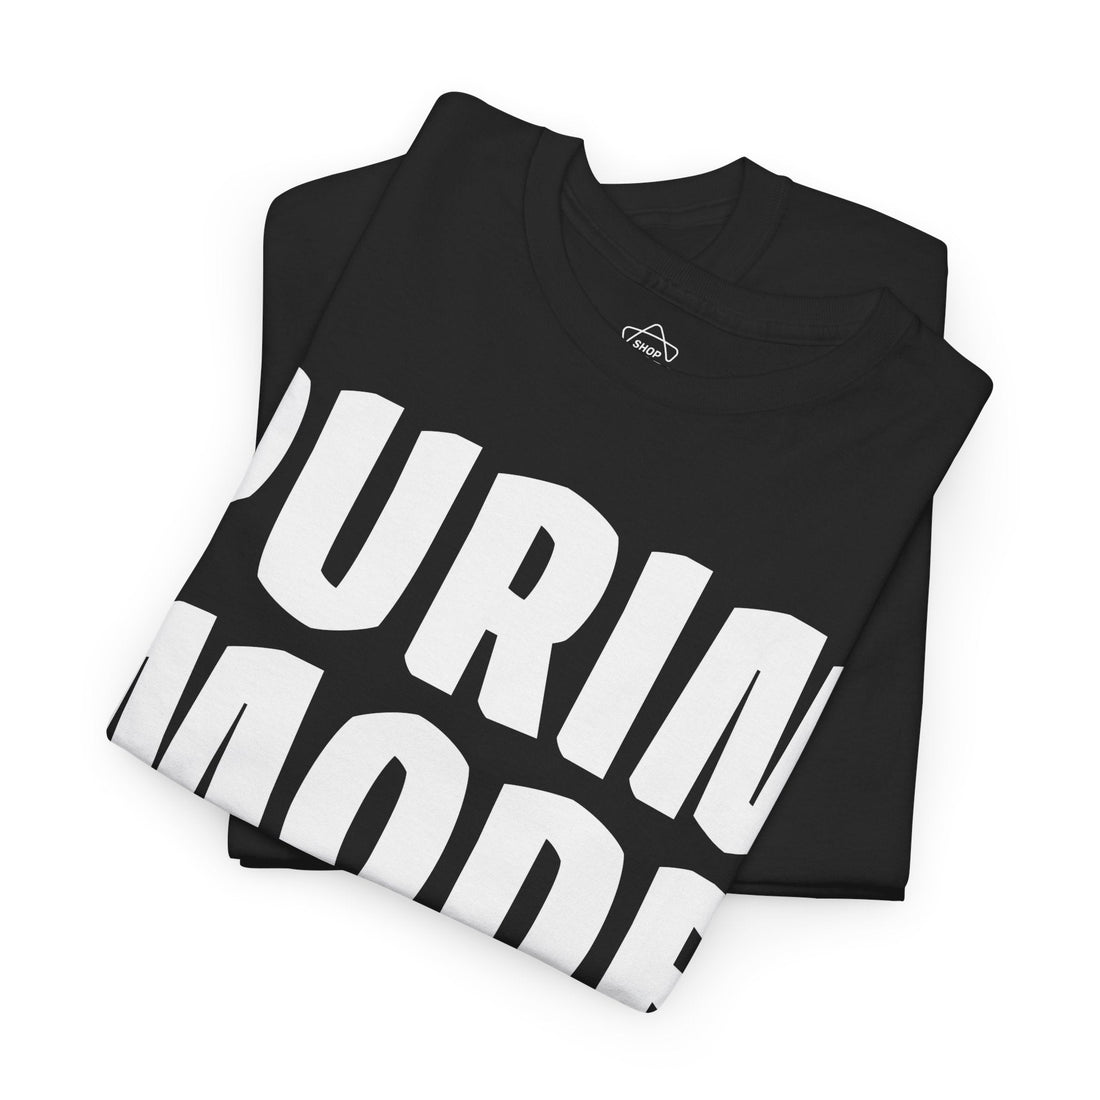 "Purim Mode On" T-Shirt - Shop Israel